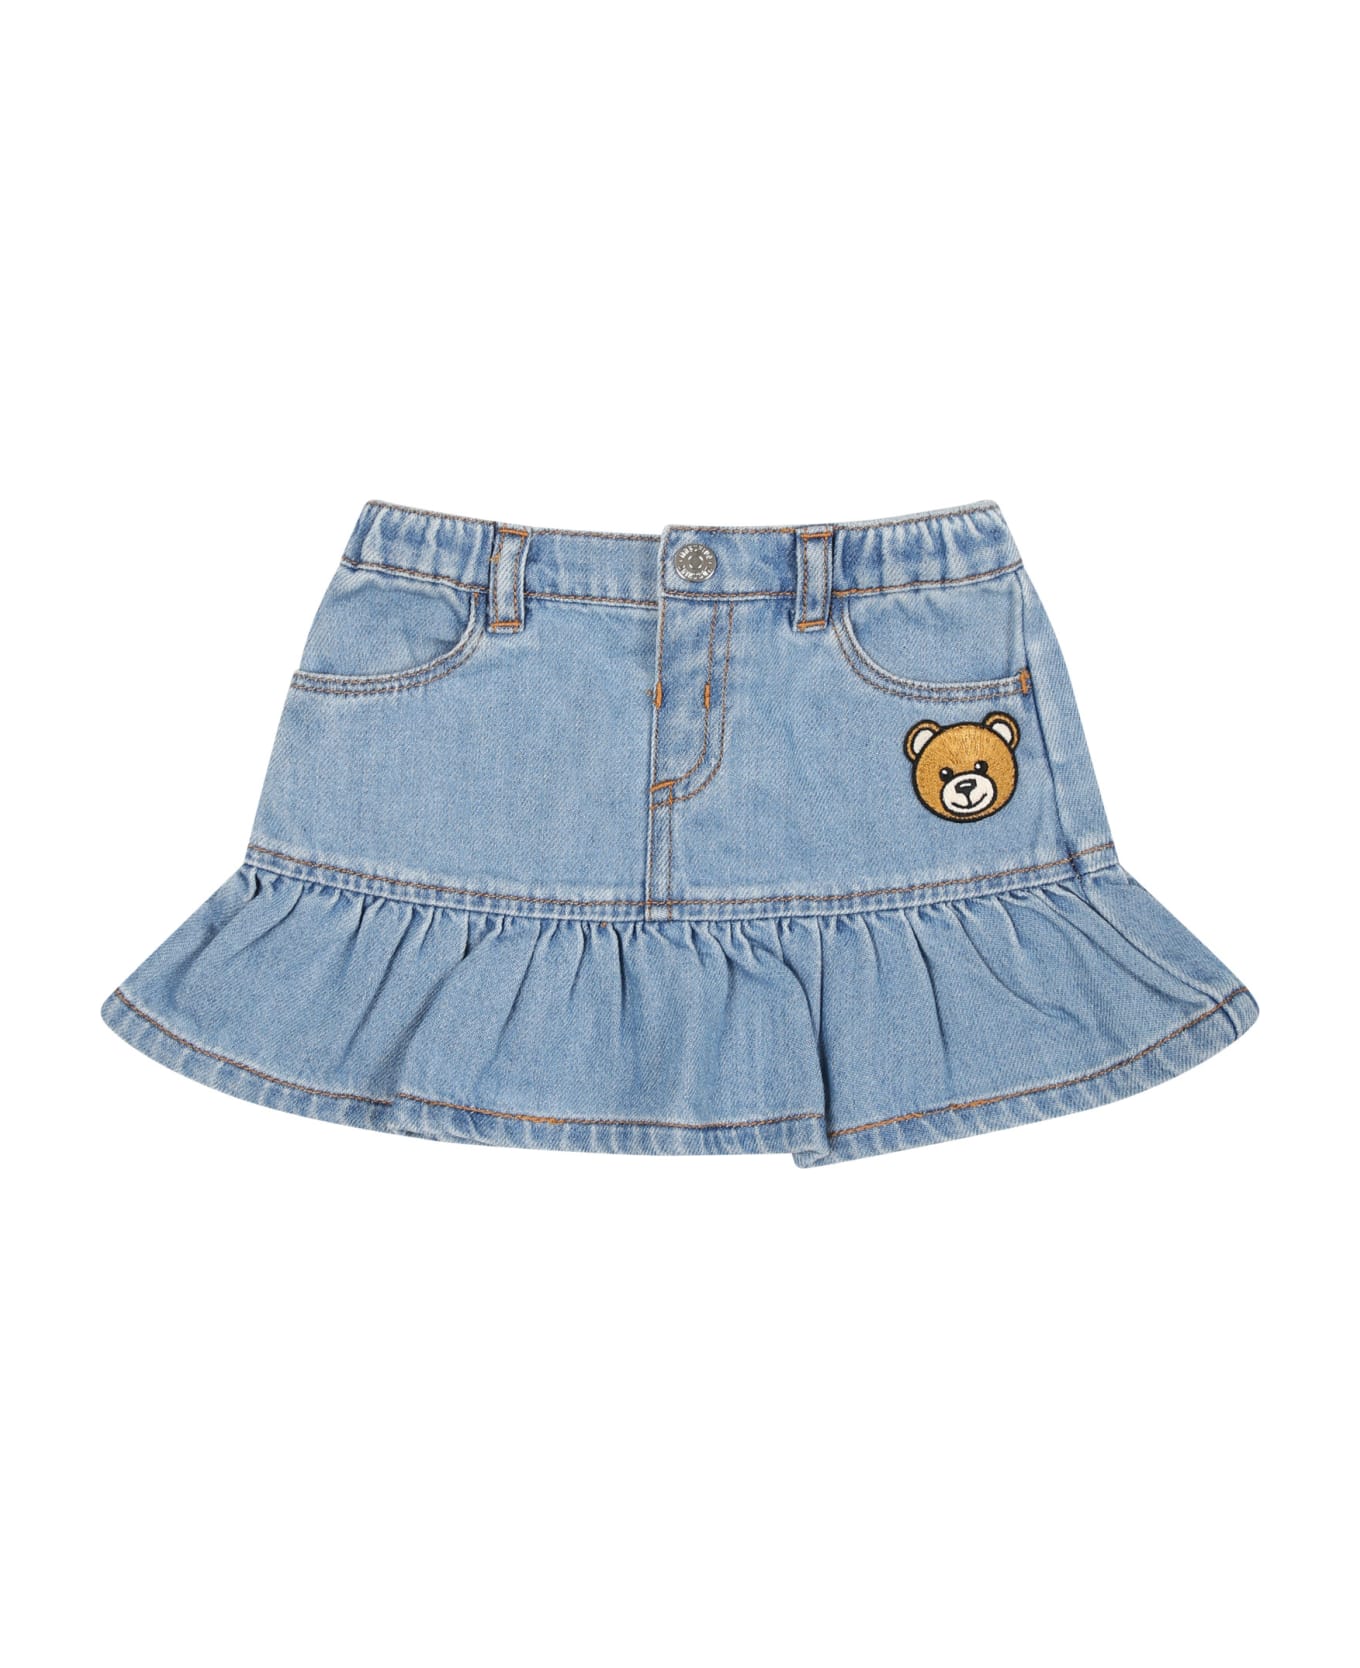 Moschino Casual Denim Skirt For Baby Girl With Teddy Bear - Denim